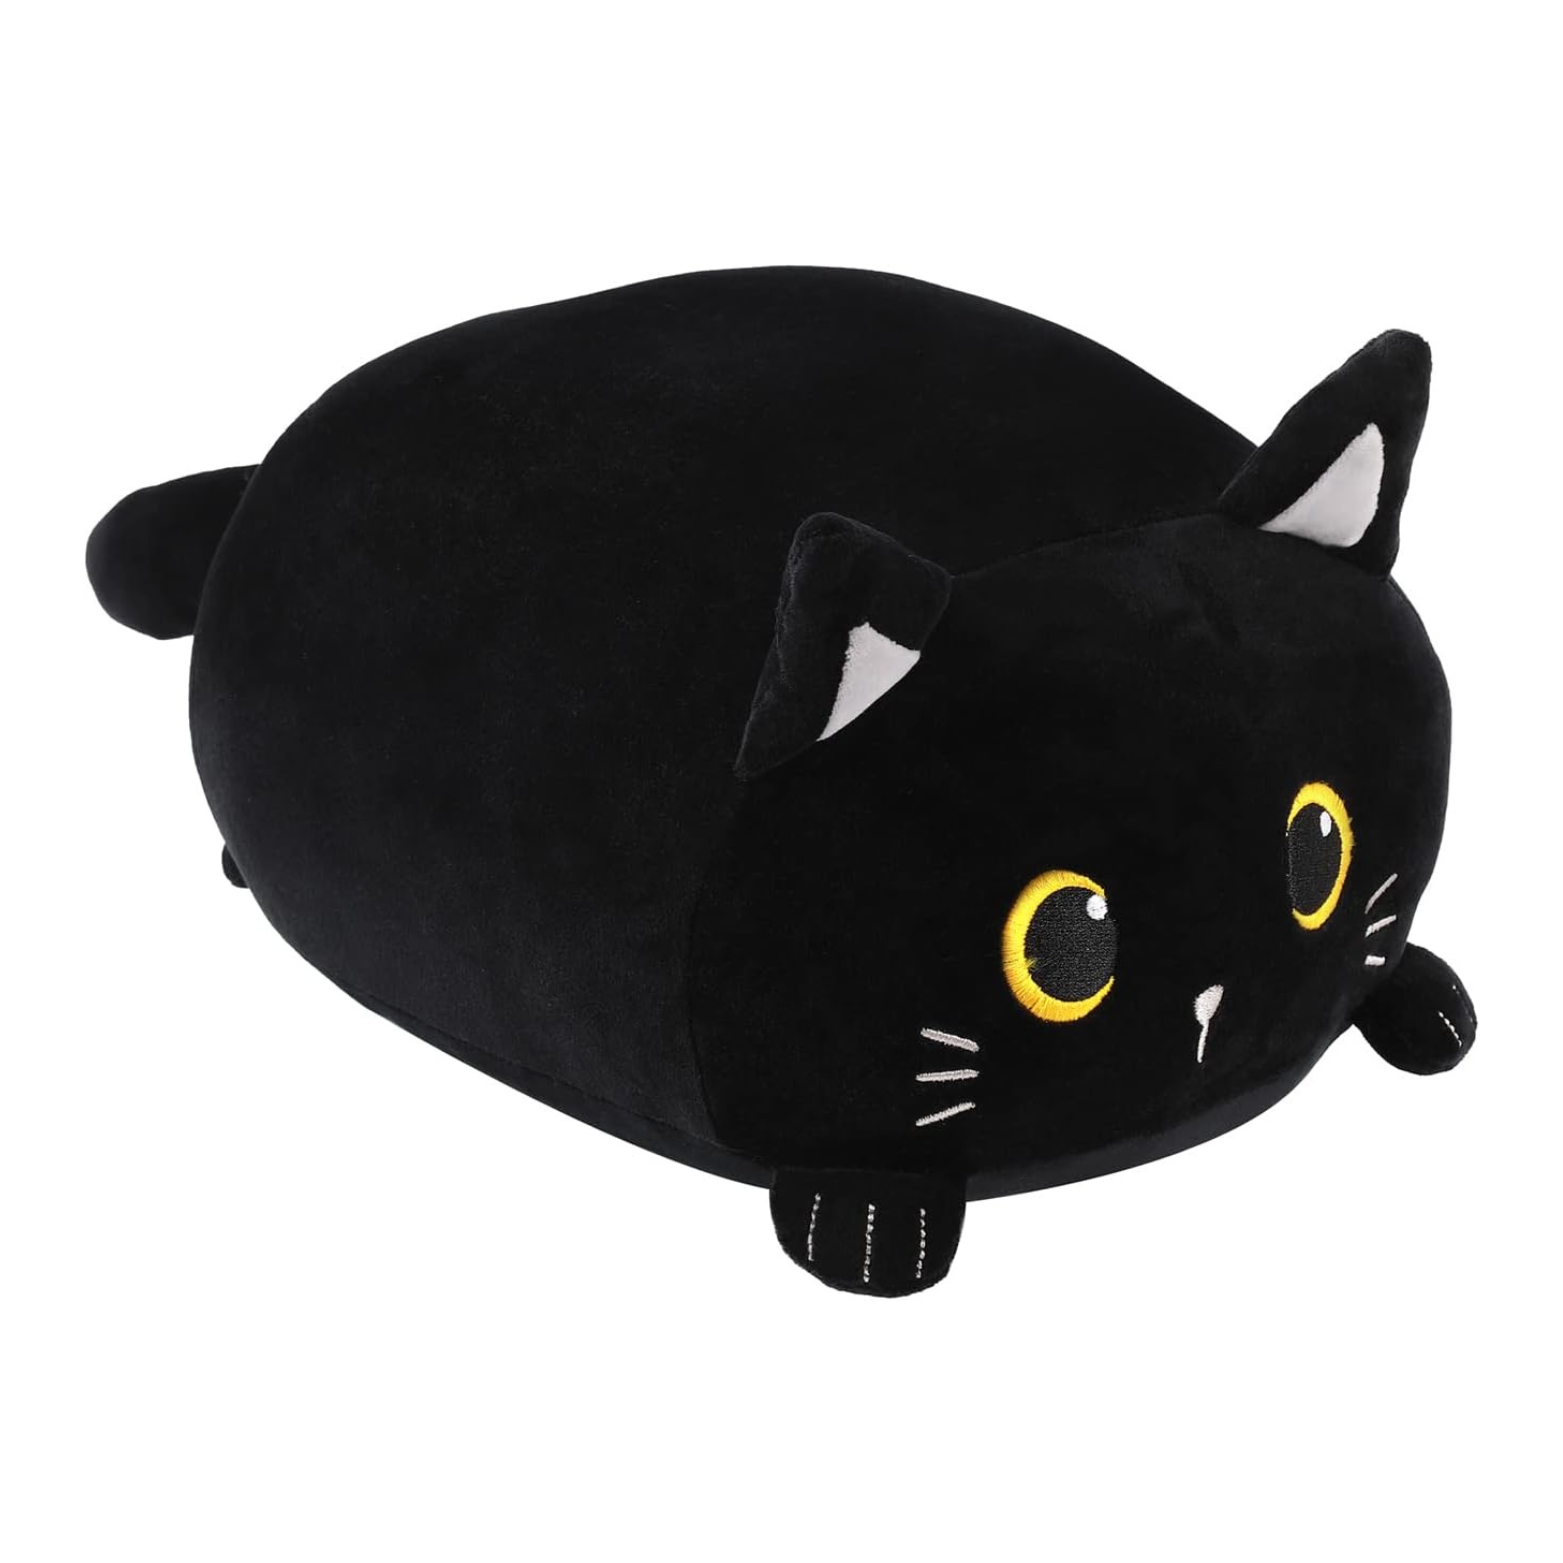 Squishmallow - Cat black cushion